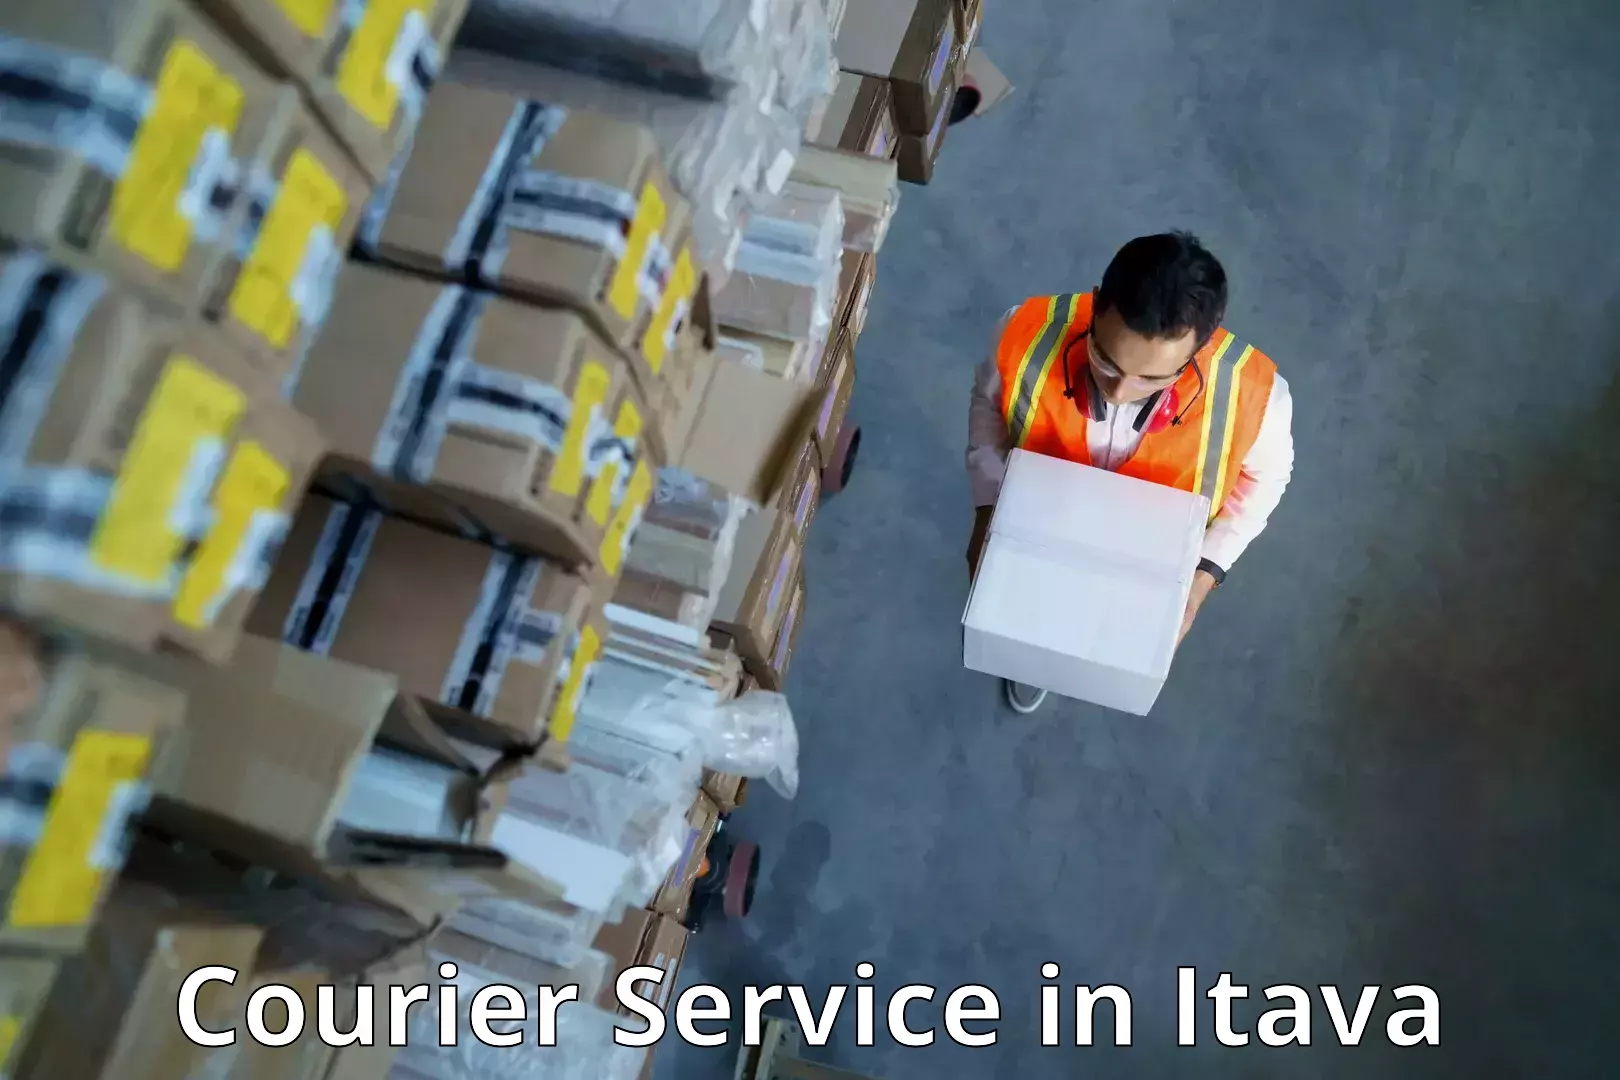 Speedy delivery service in Itava